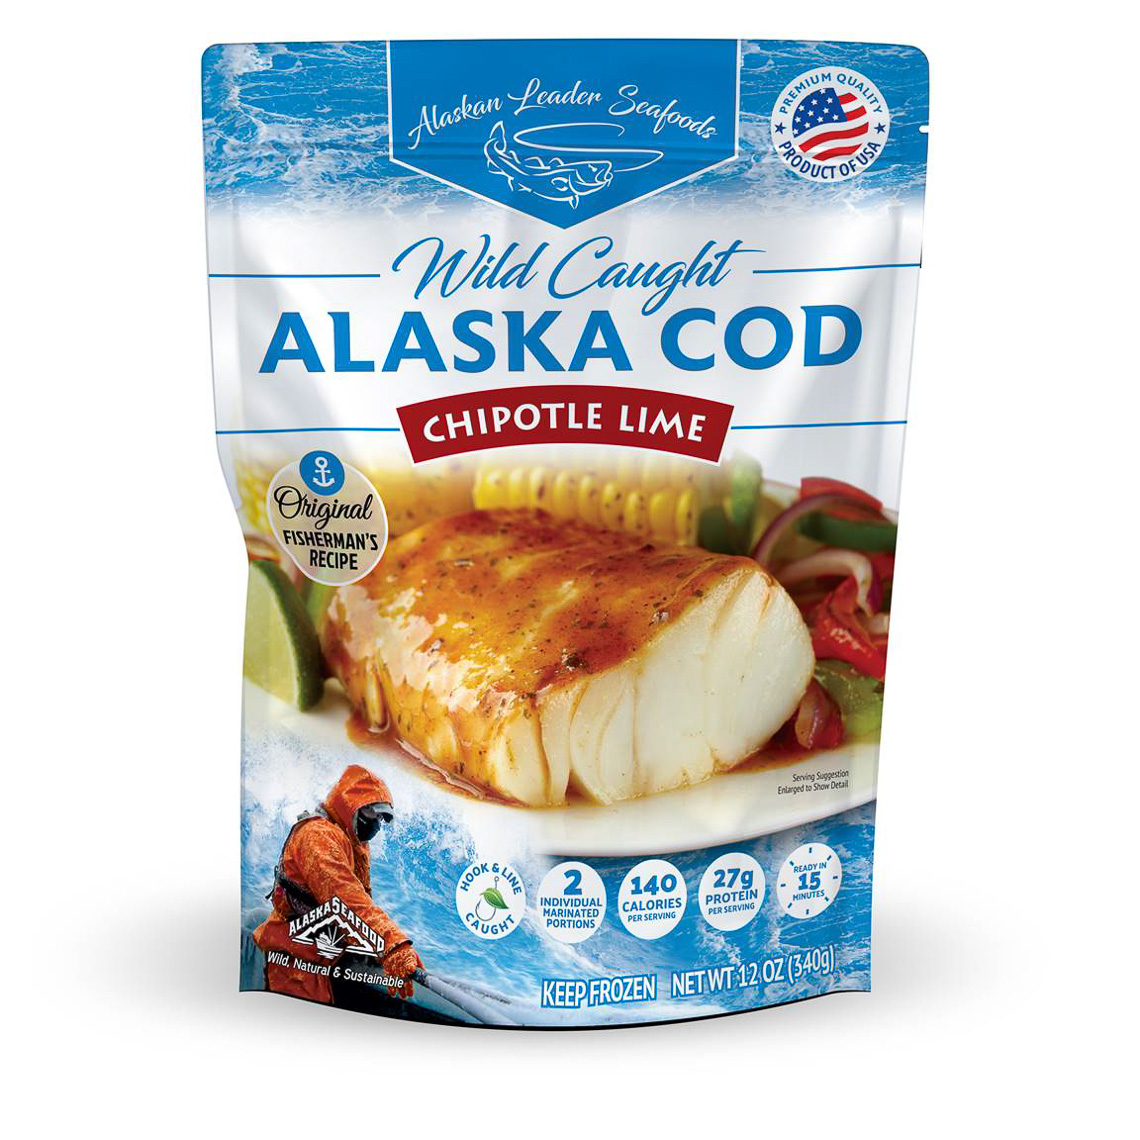 Alaskan Leader Seafood Photography